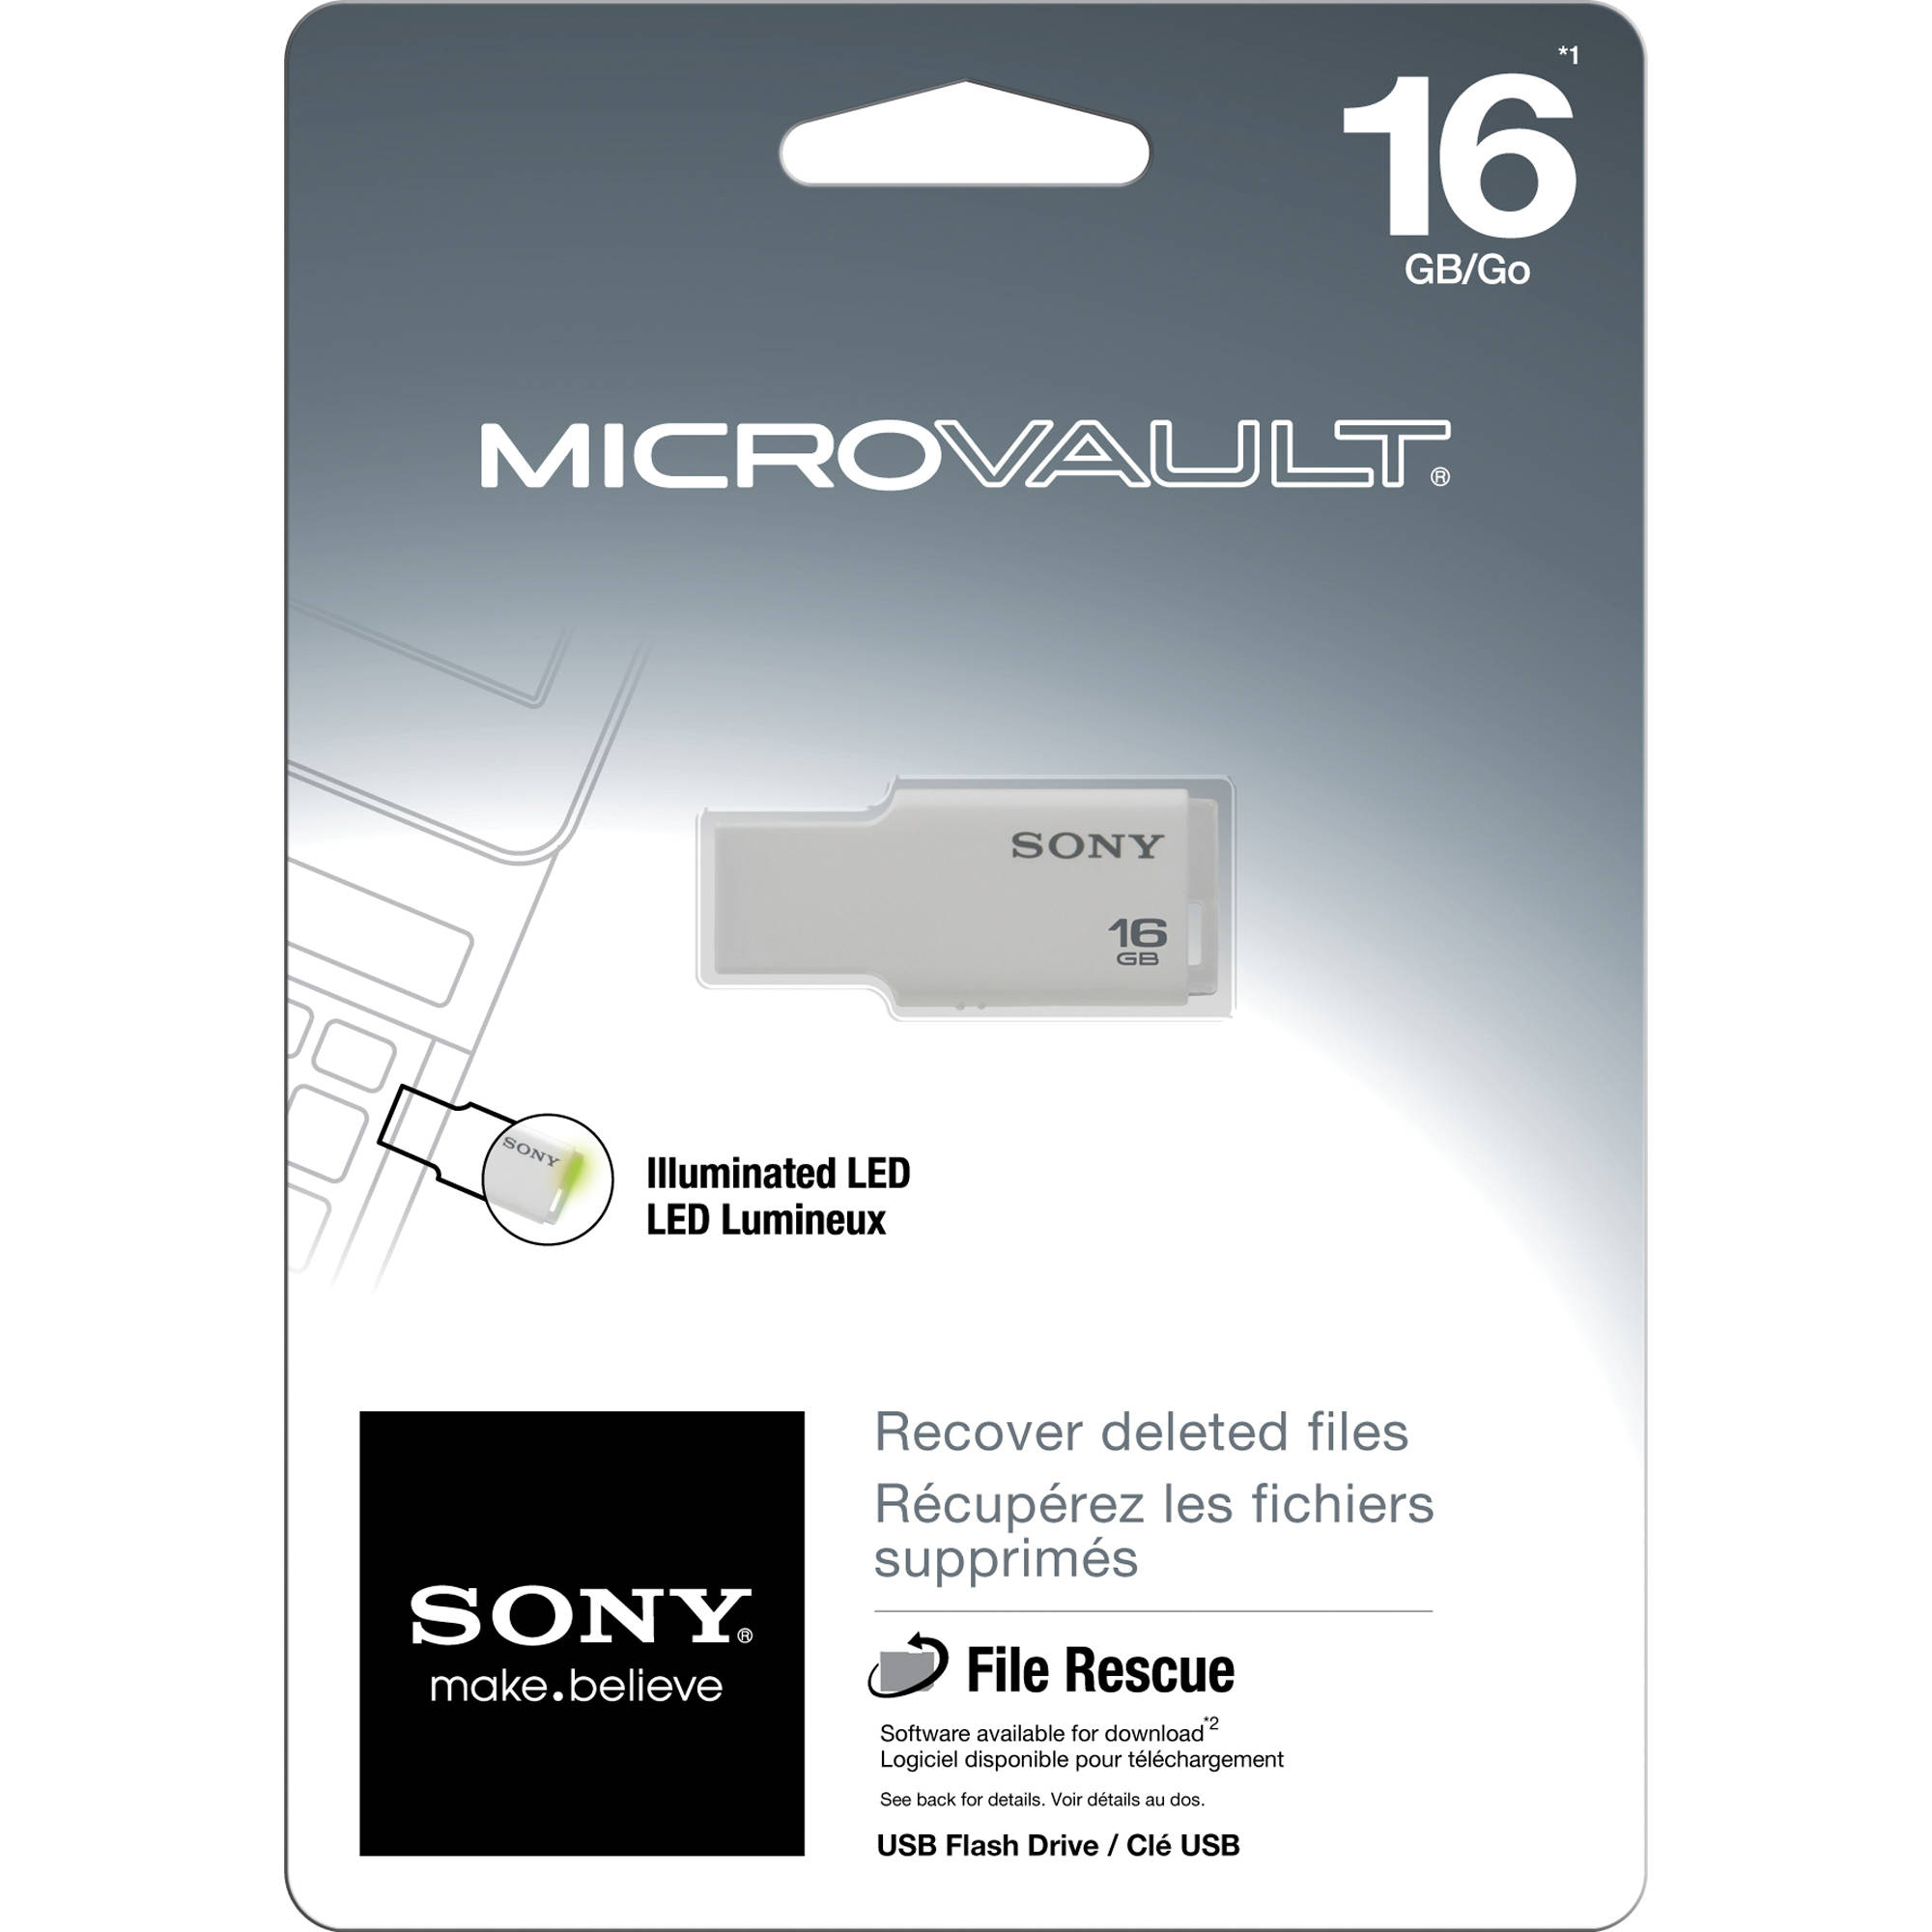 SONY 16GB Microvault USB Flash Drive